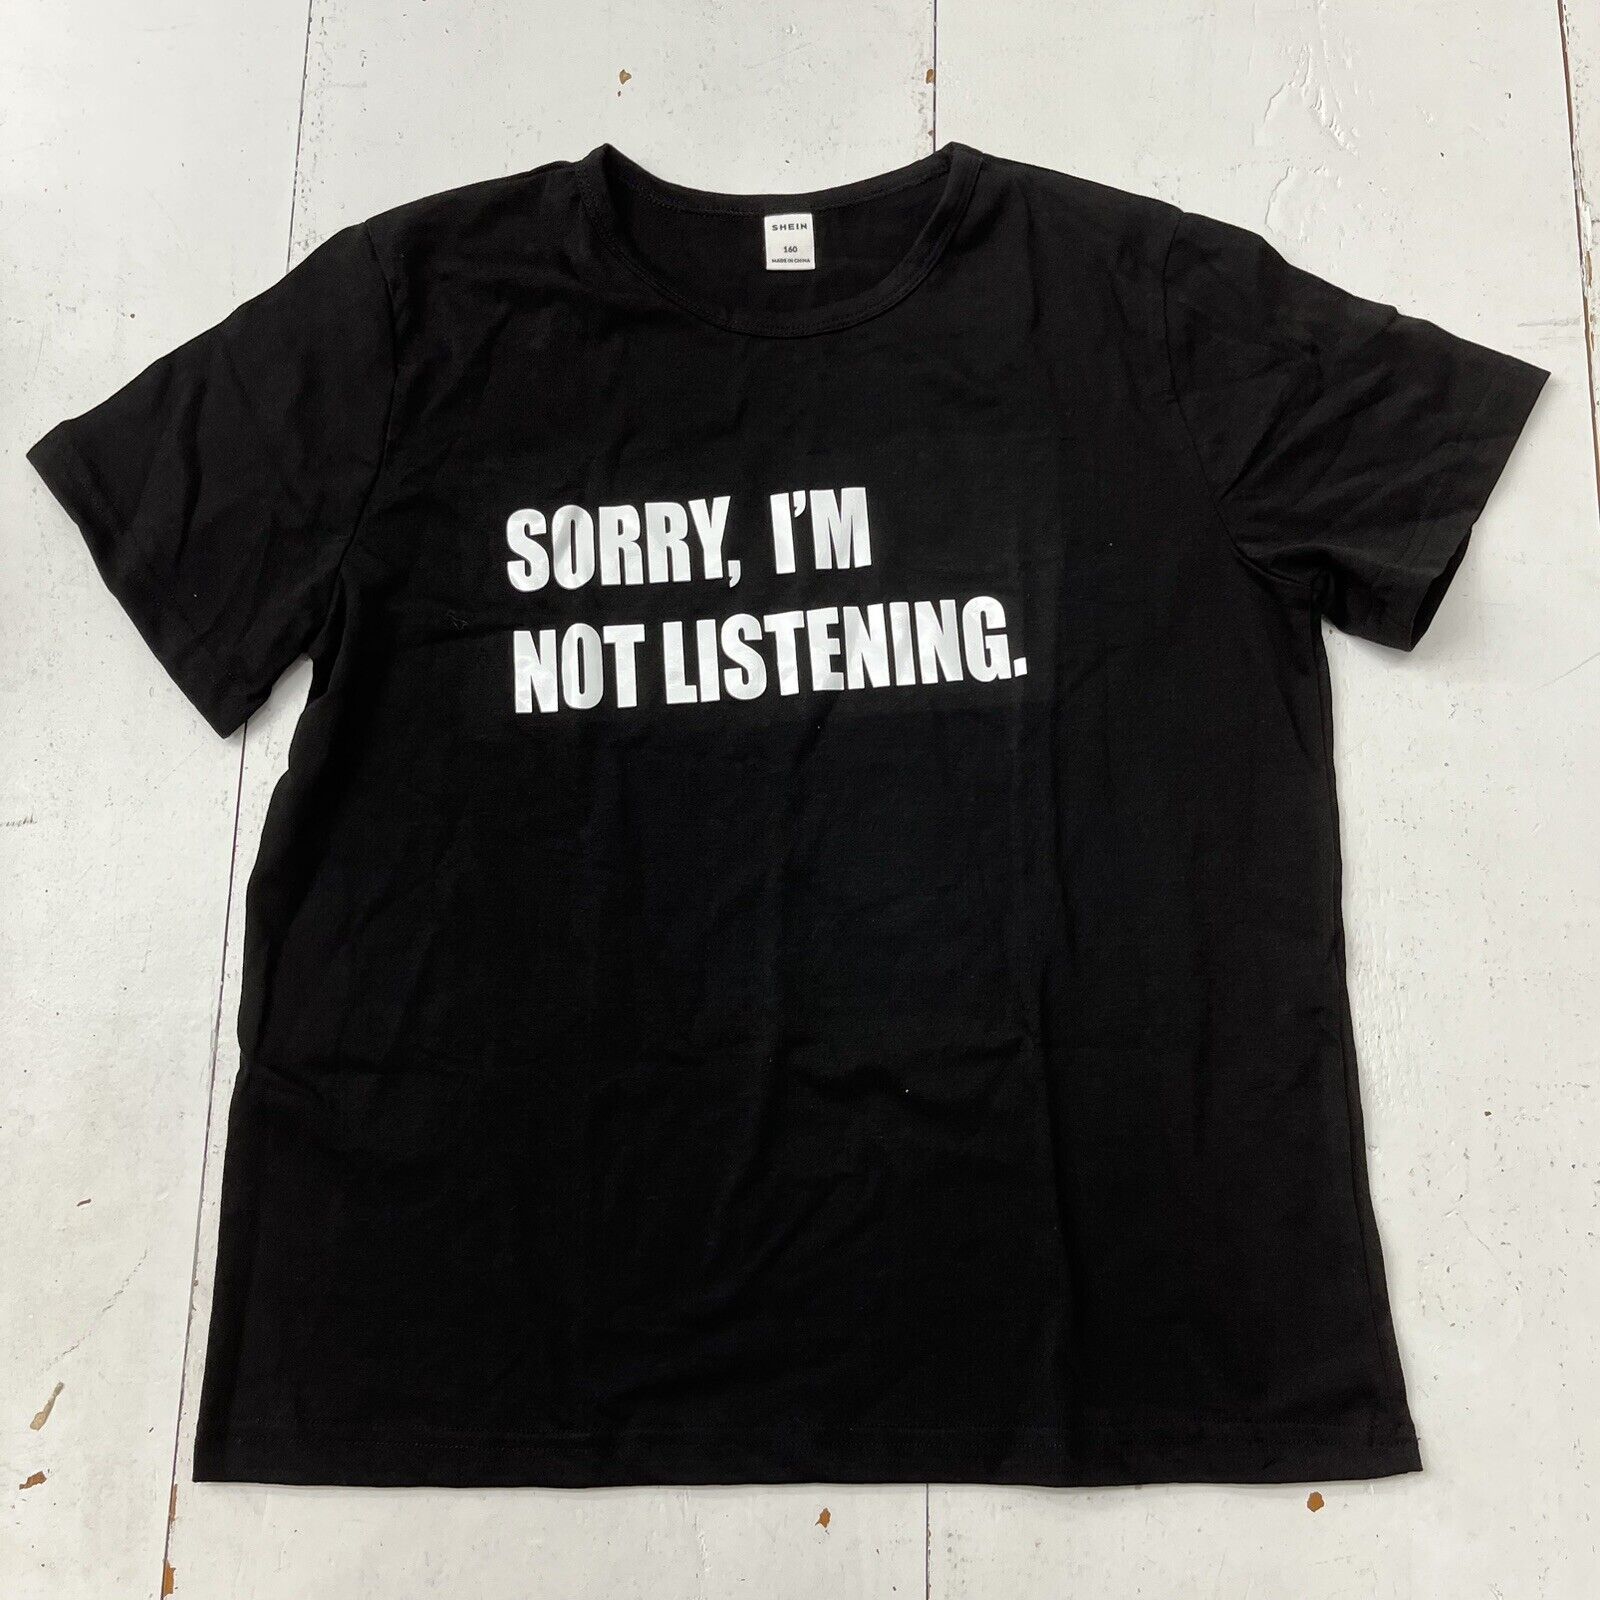 Shein Black “Sorry I’m Not Listening” Short Sleeve T-Shirt Girls Size Large NEW